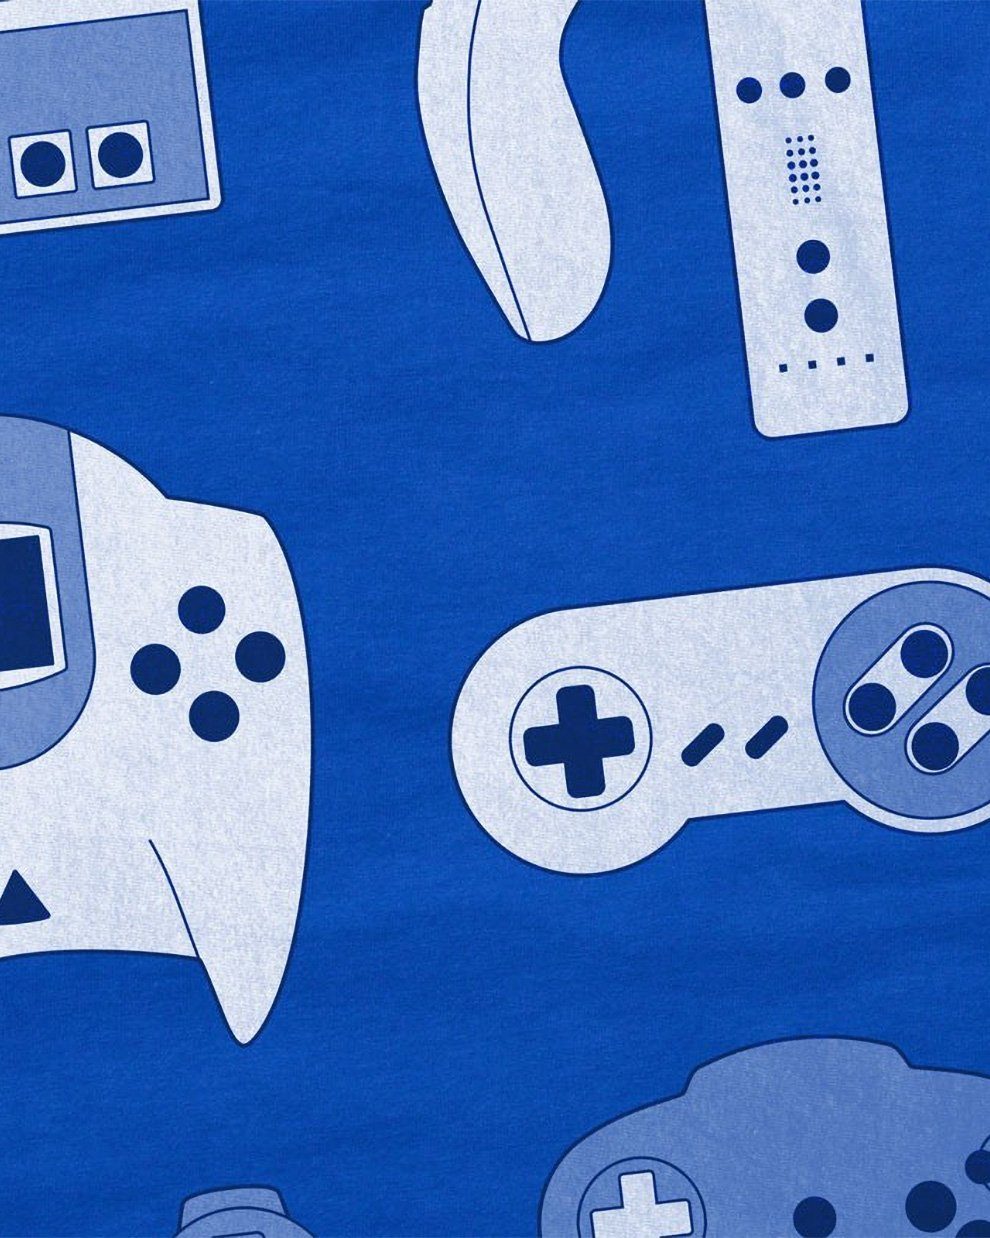 nintendo snes nes Gamer wii mario style3 Print-Shirt sega super kart ps4 sonic switch blau zelda Herren T-Shirt